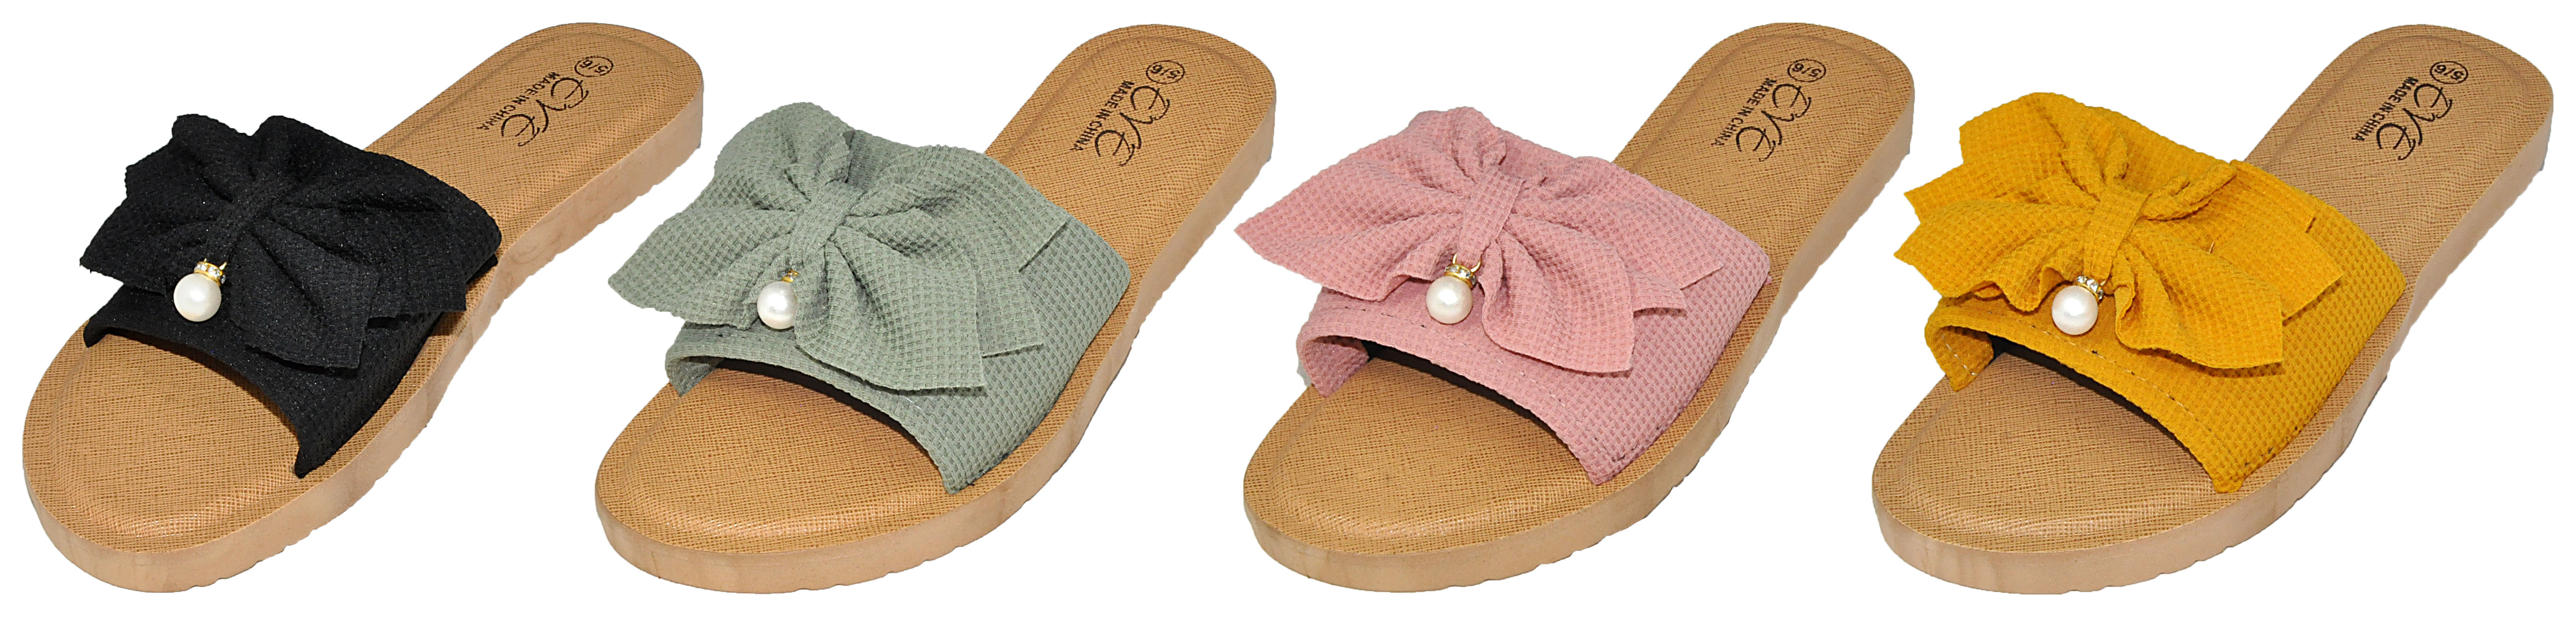 Women's Wedge Slide Sandals w/ Knit Bow TIE Strap & Pearl Embellishment